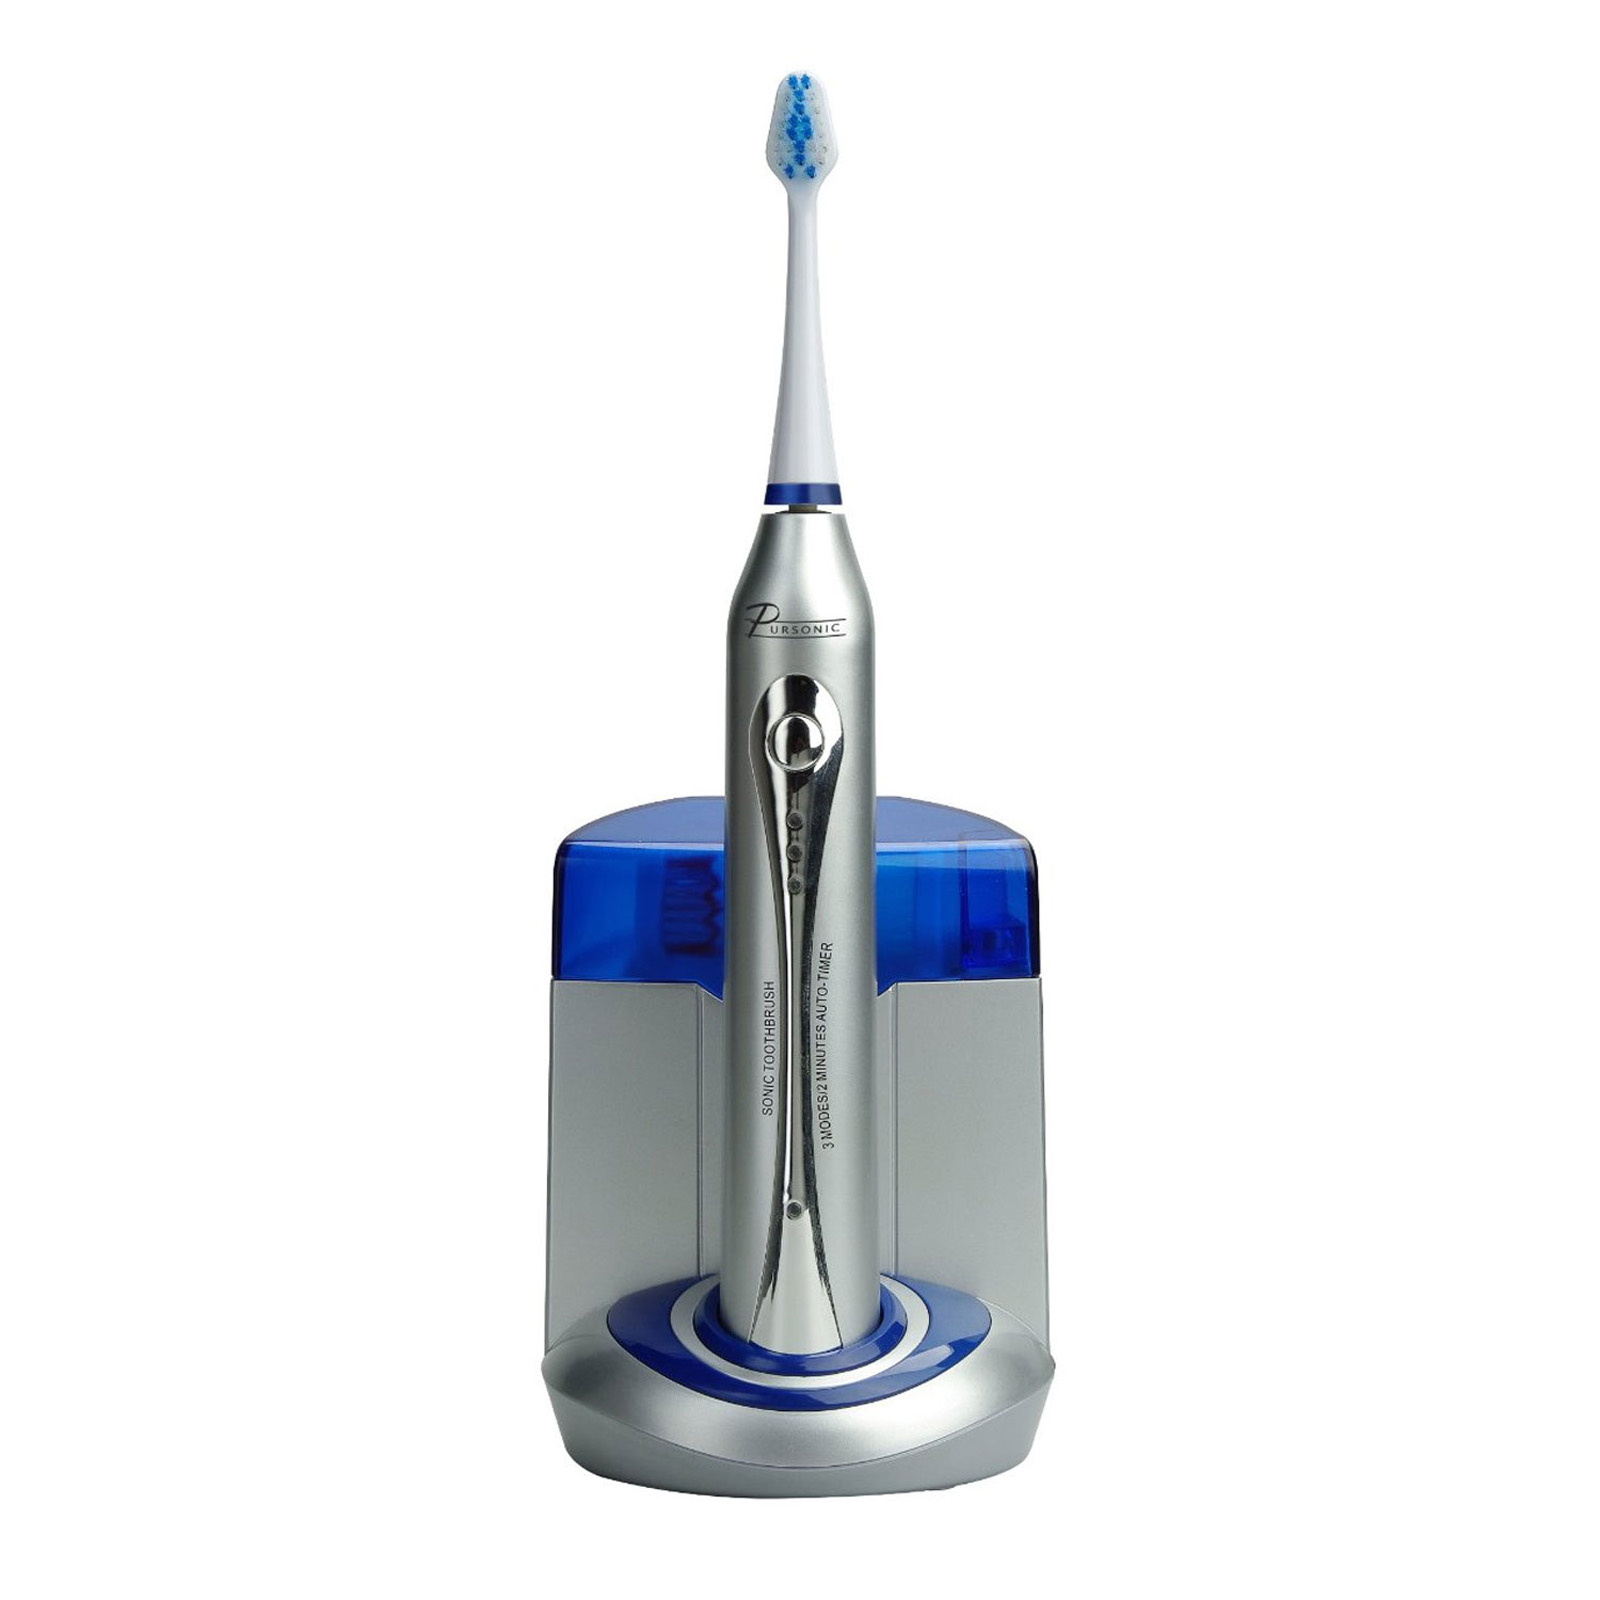 Pursonic sonic toothbrush with uv function with bonus 12 brush heads - image 4 of 4